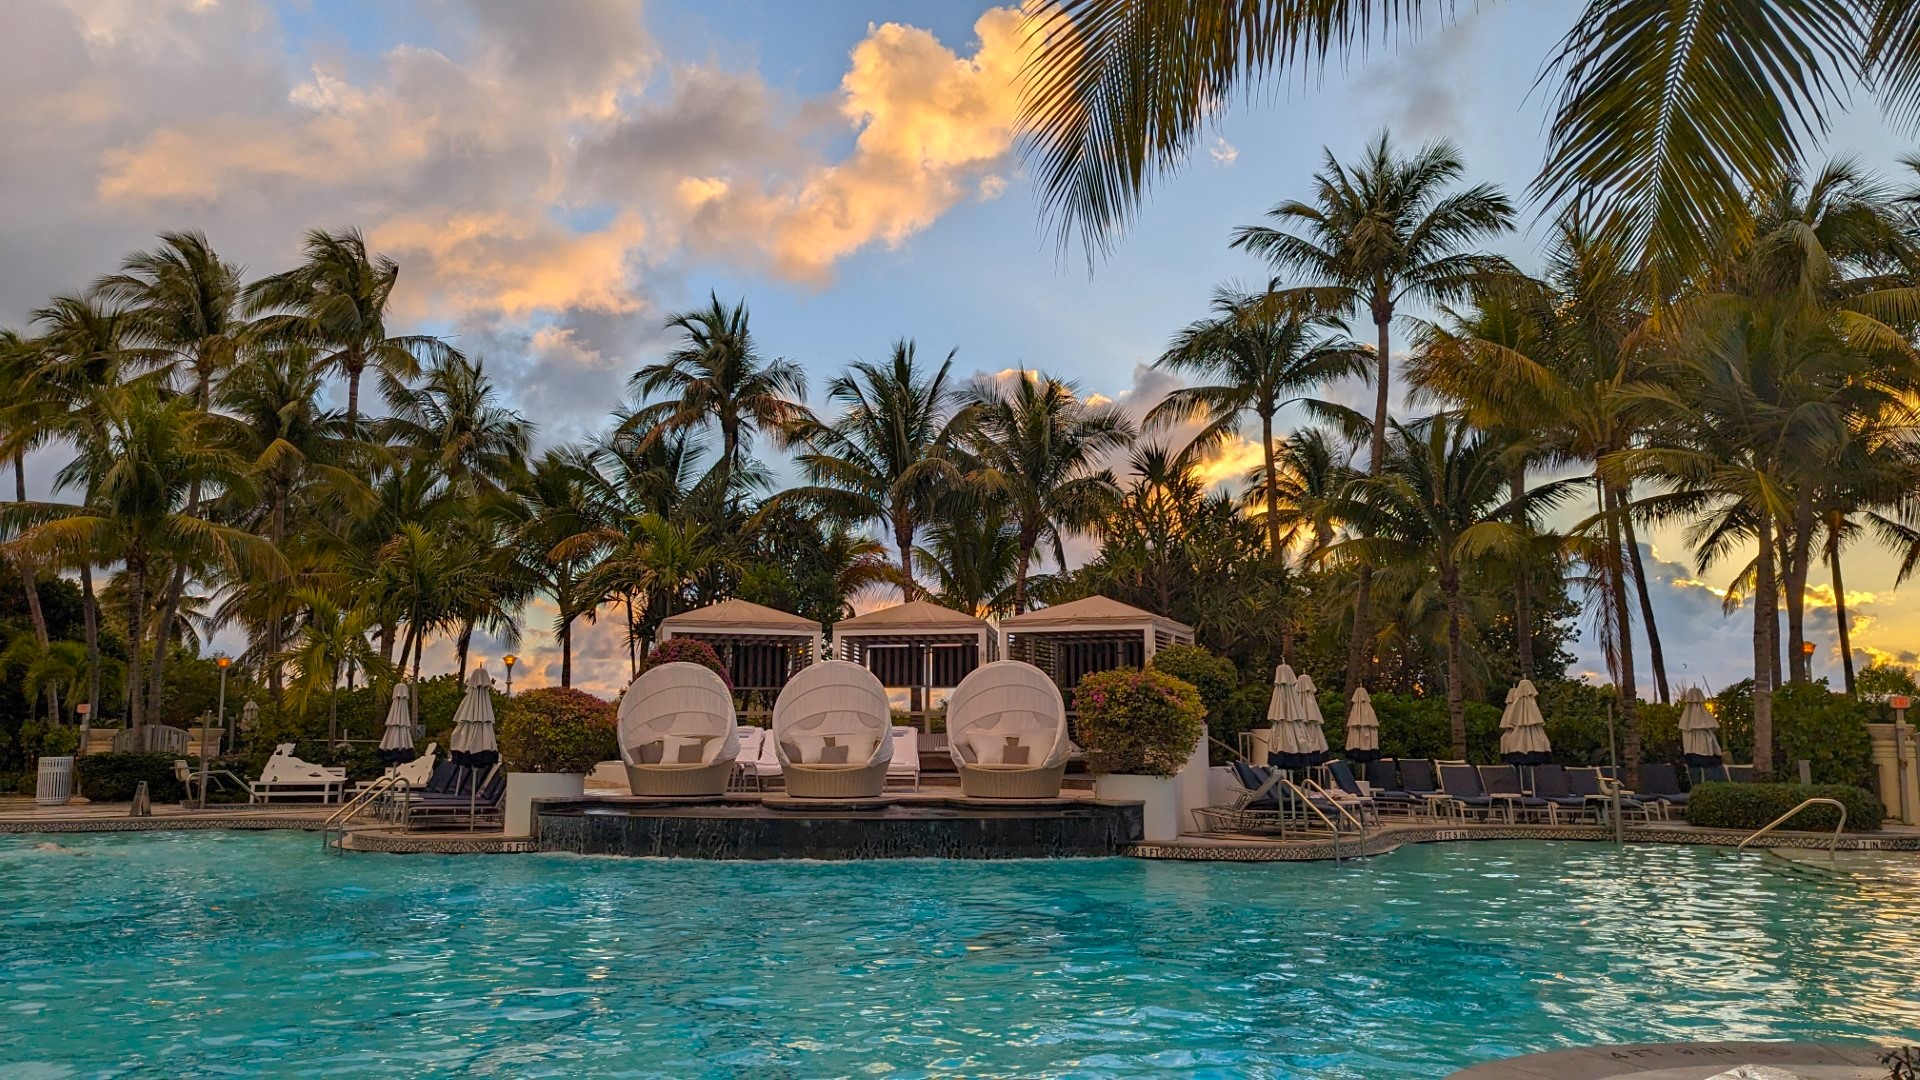 Loews Miami Beach Hotel pool